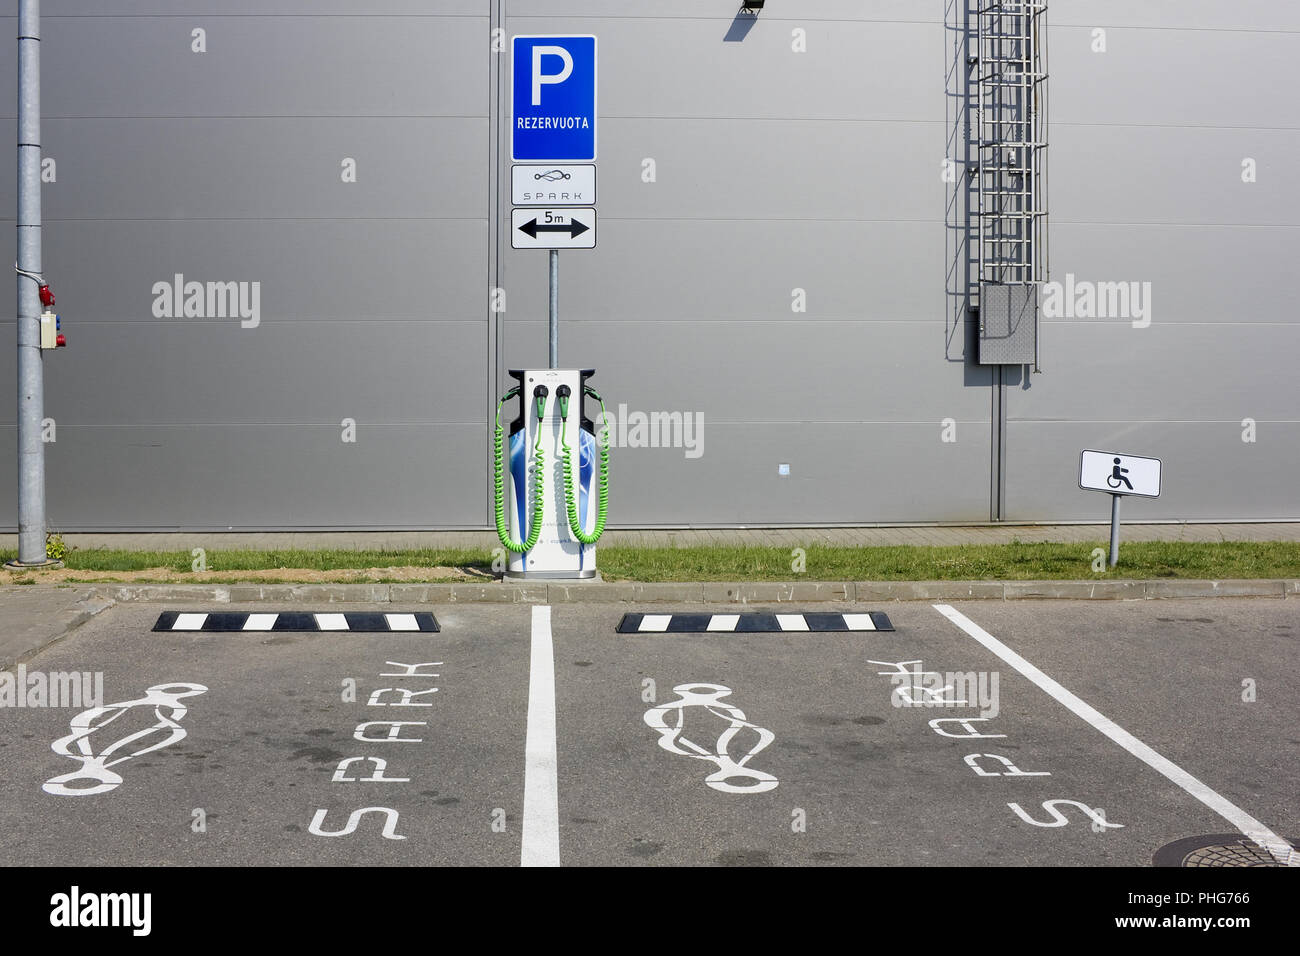 European Spark electric car system Stock Photo